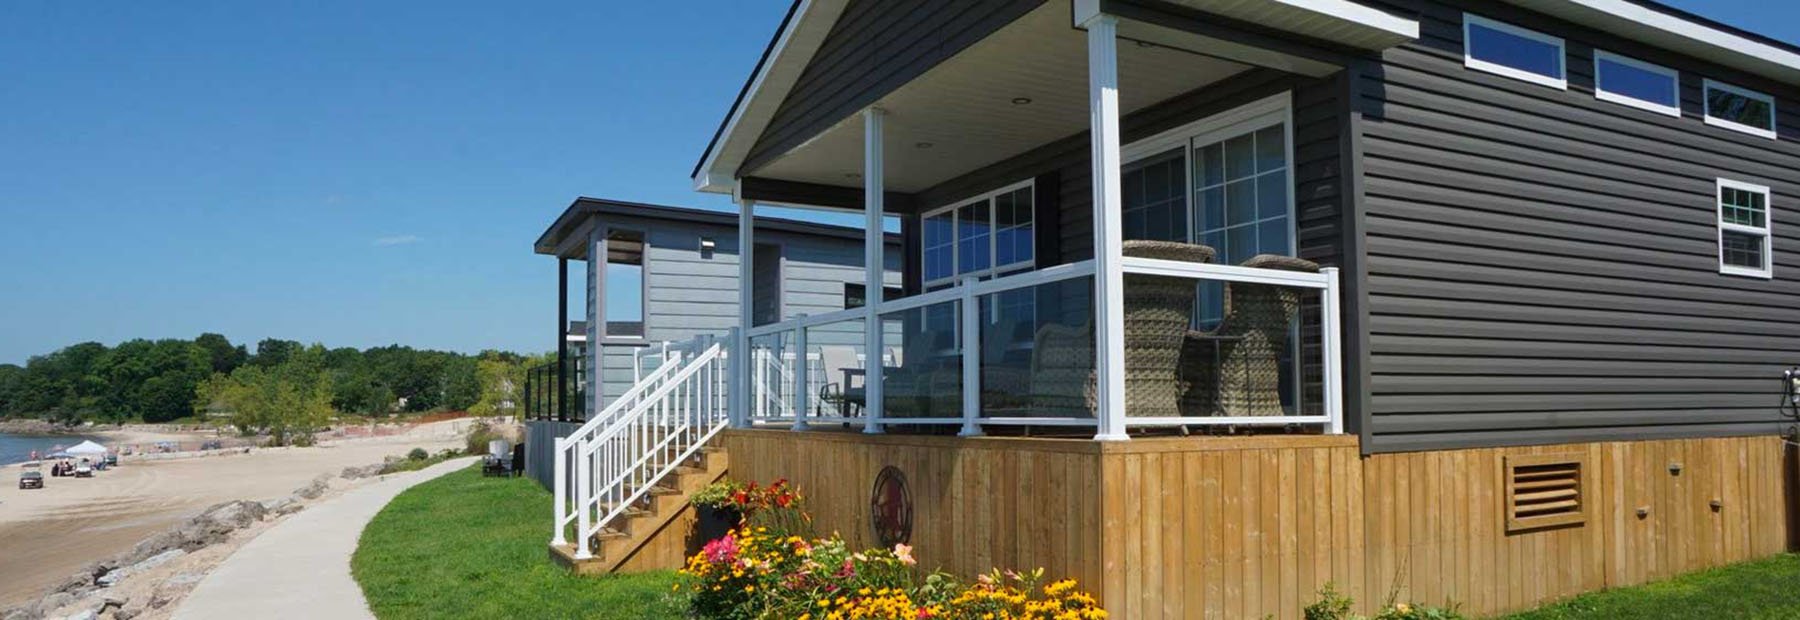 Sun Retreats at Sherkston Shores Homes for Sale